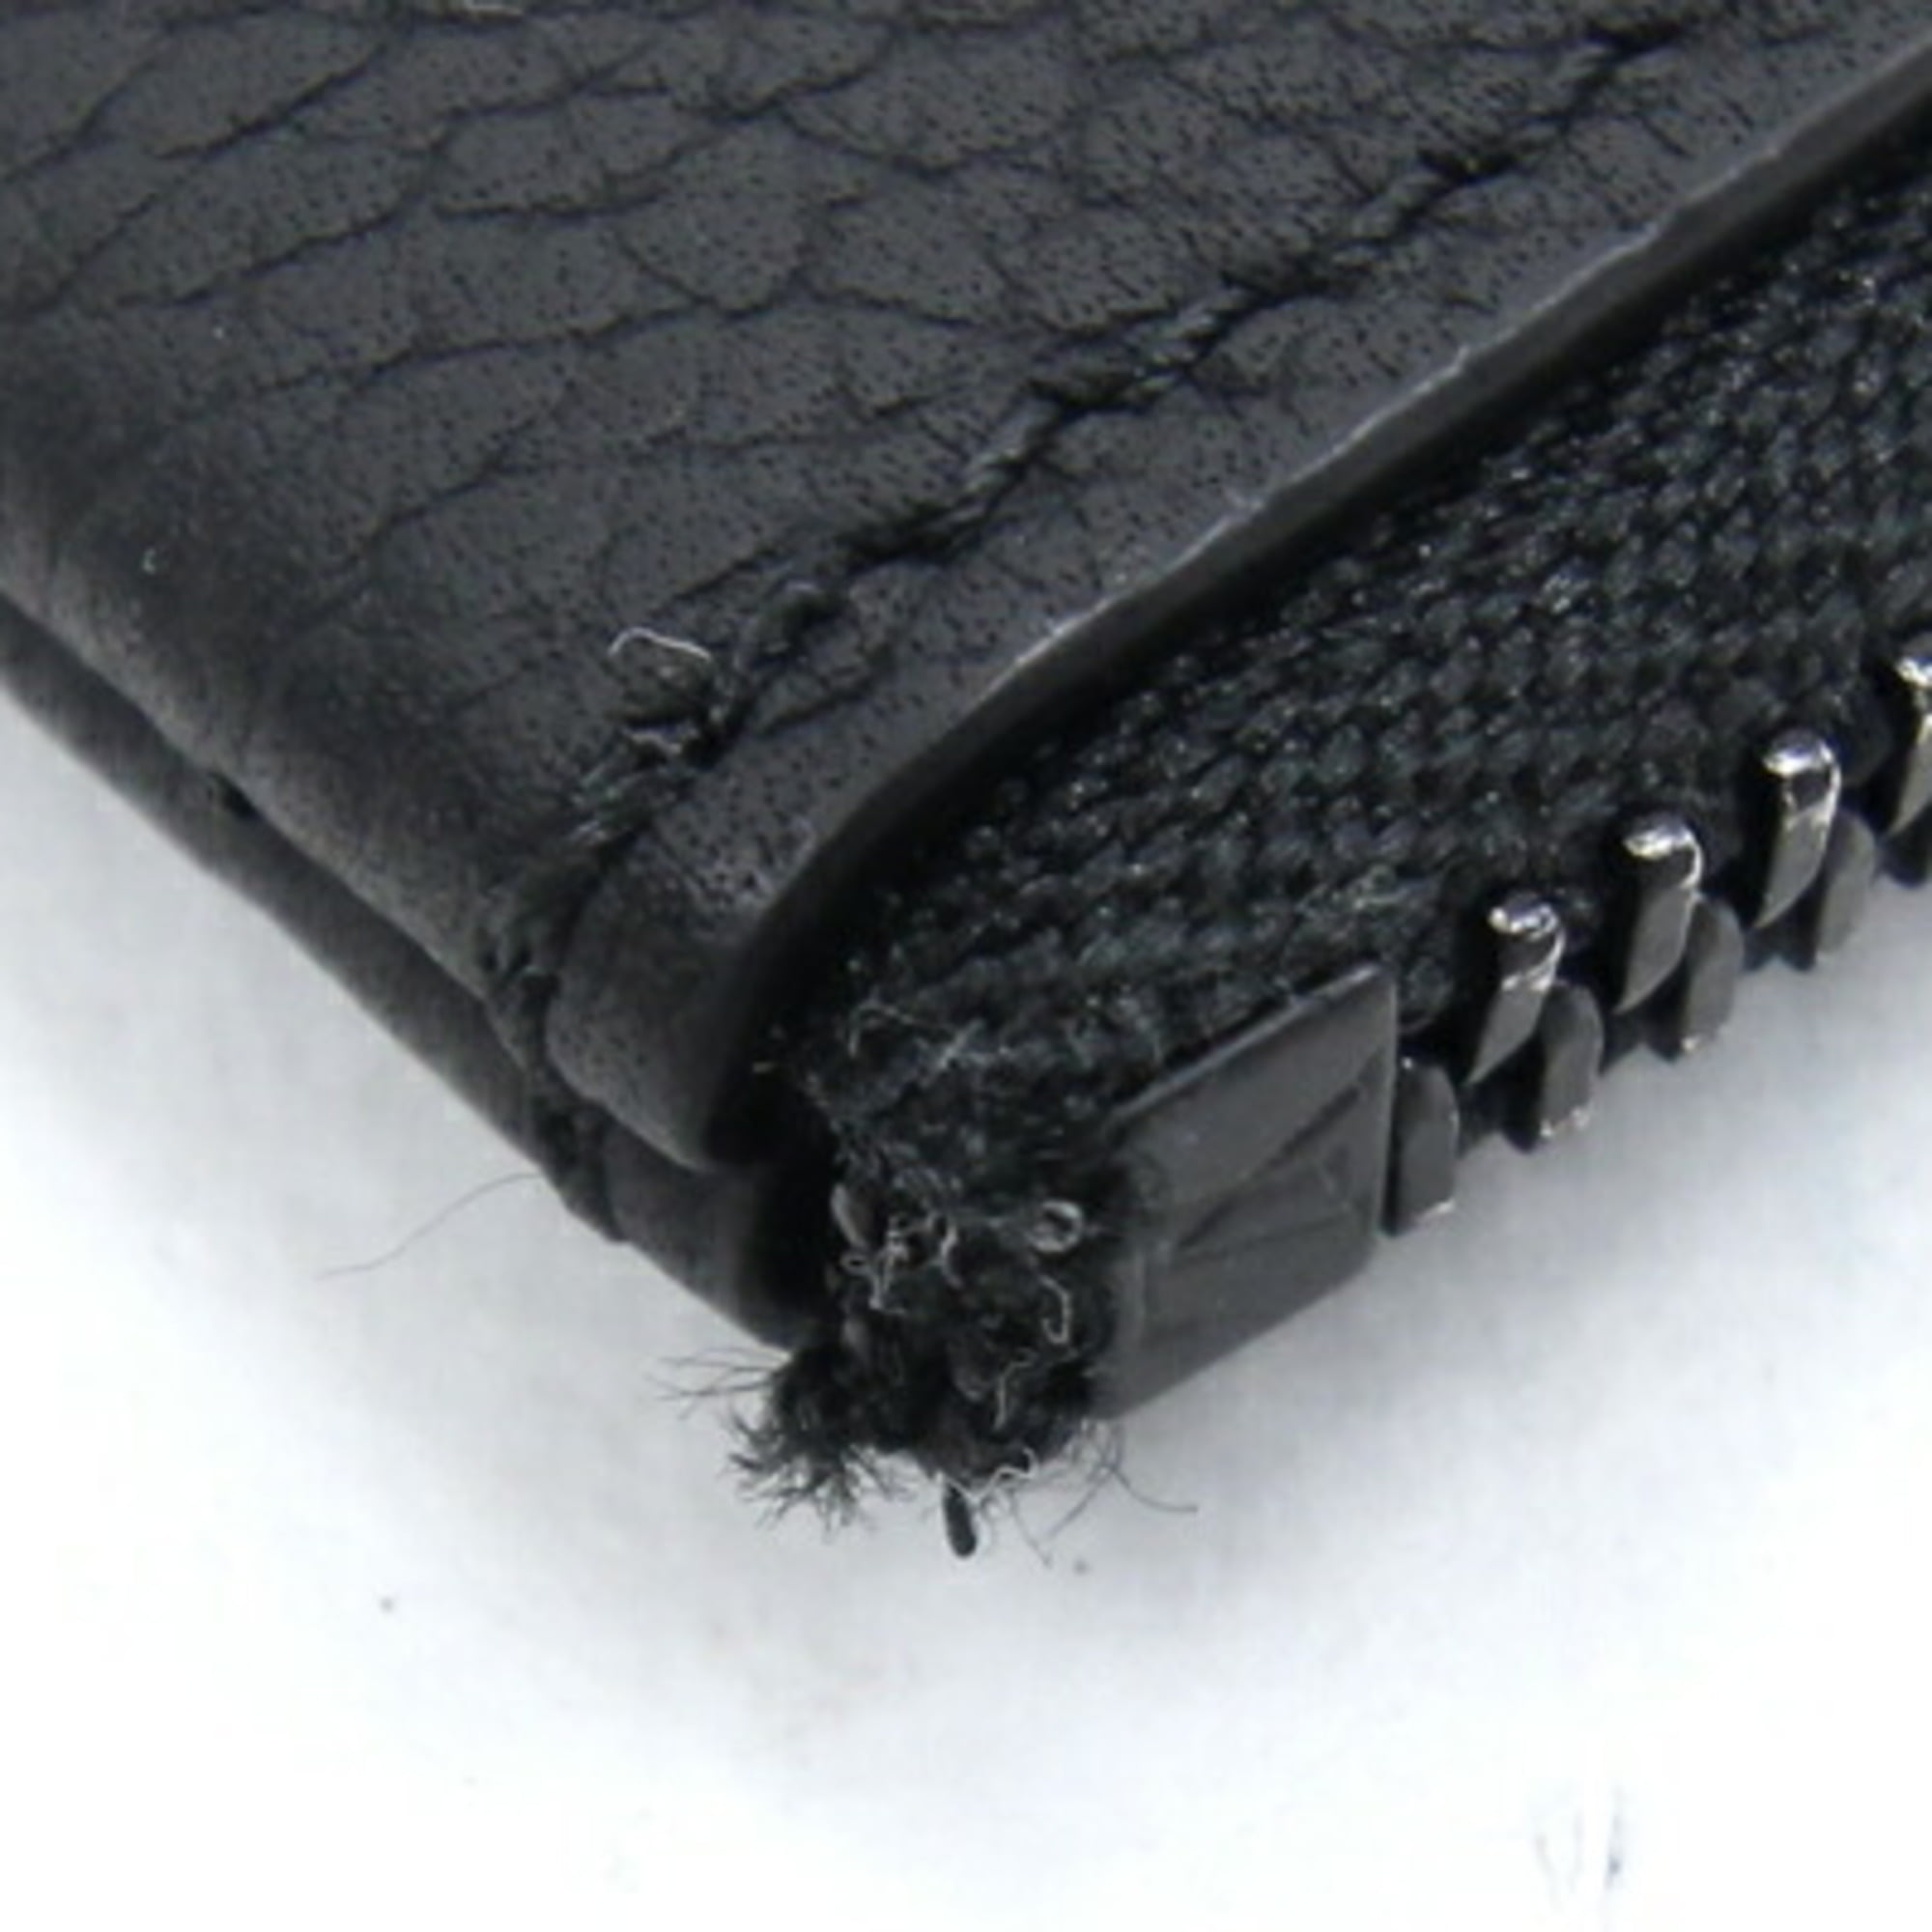 Shop Louis Vuitton AEROGRAM Key Pouch (M81031) by graziagiglio